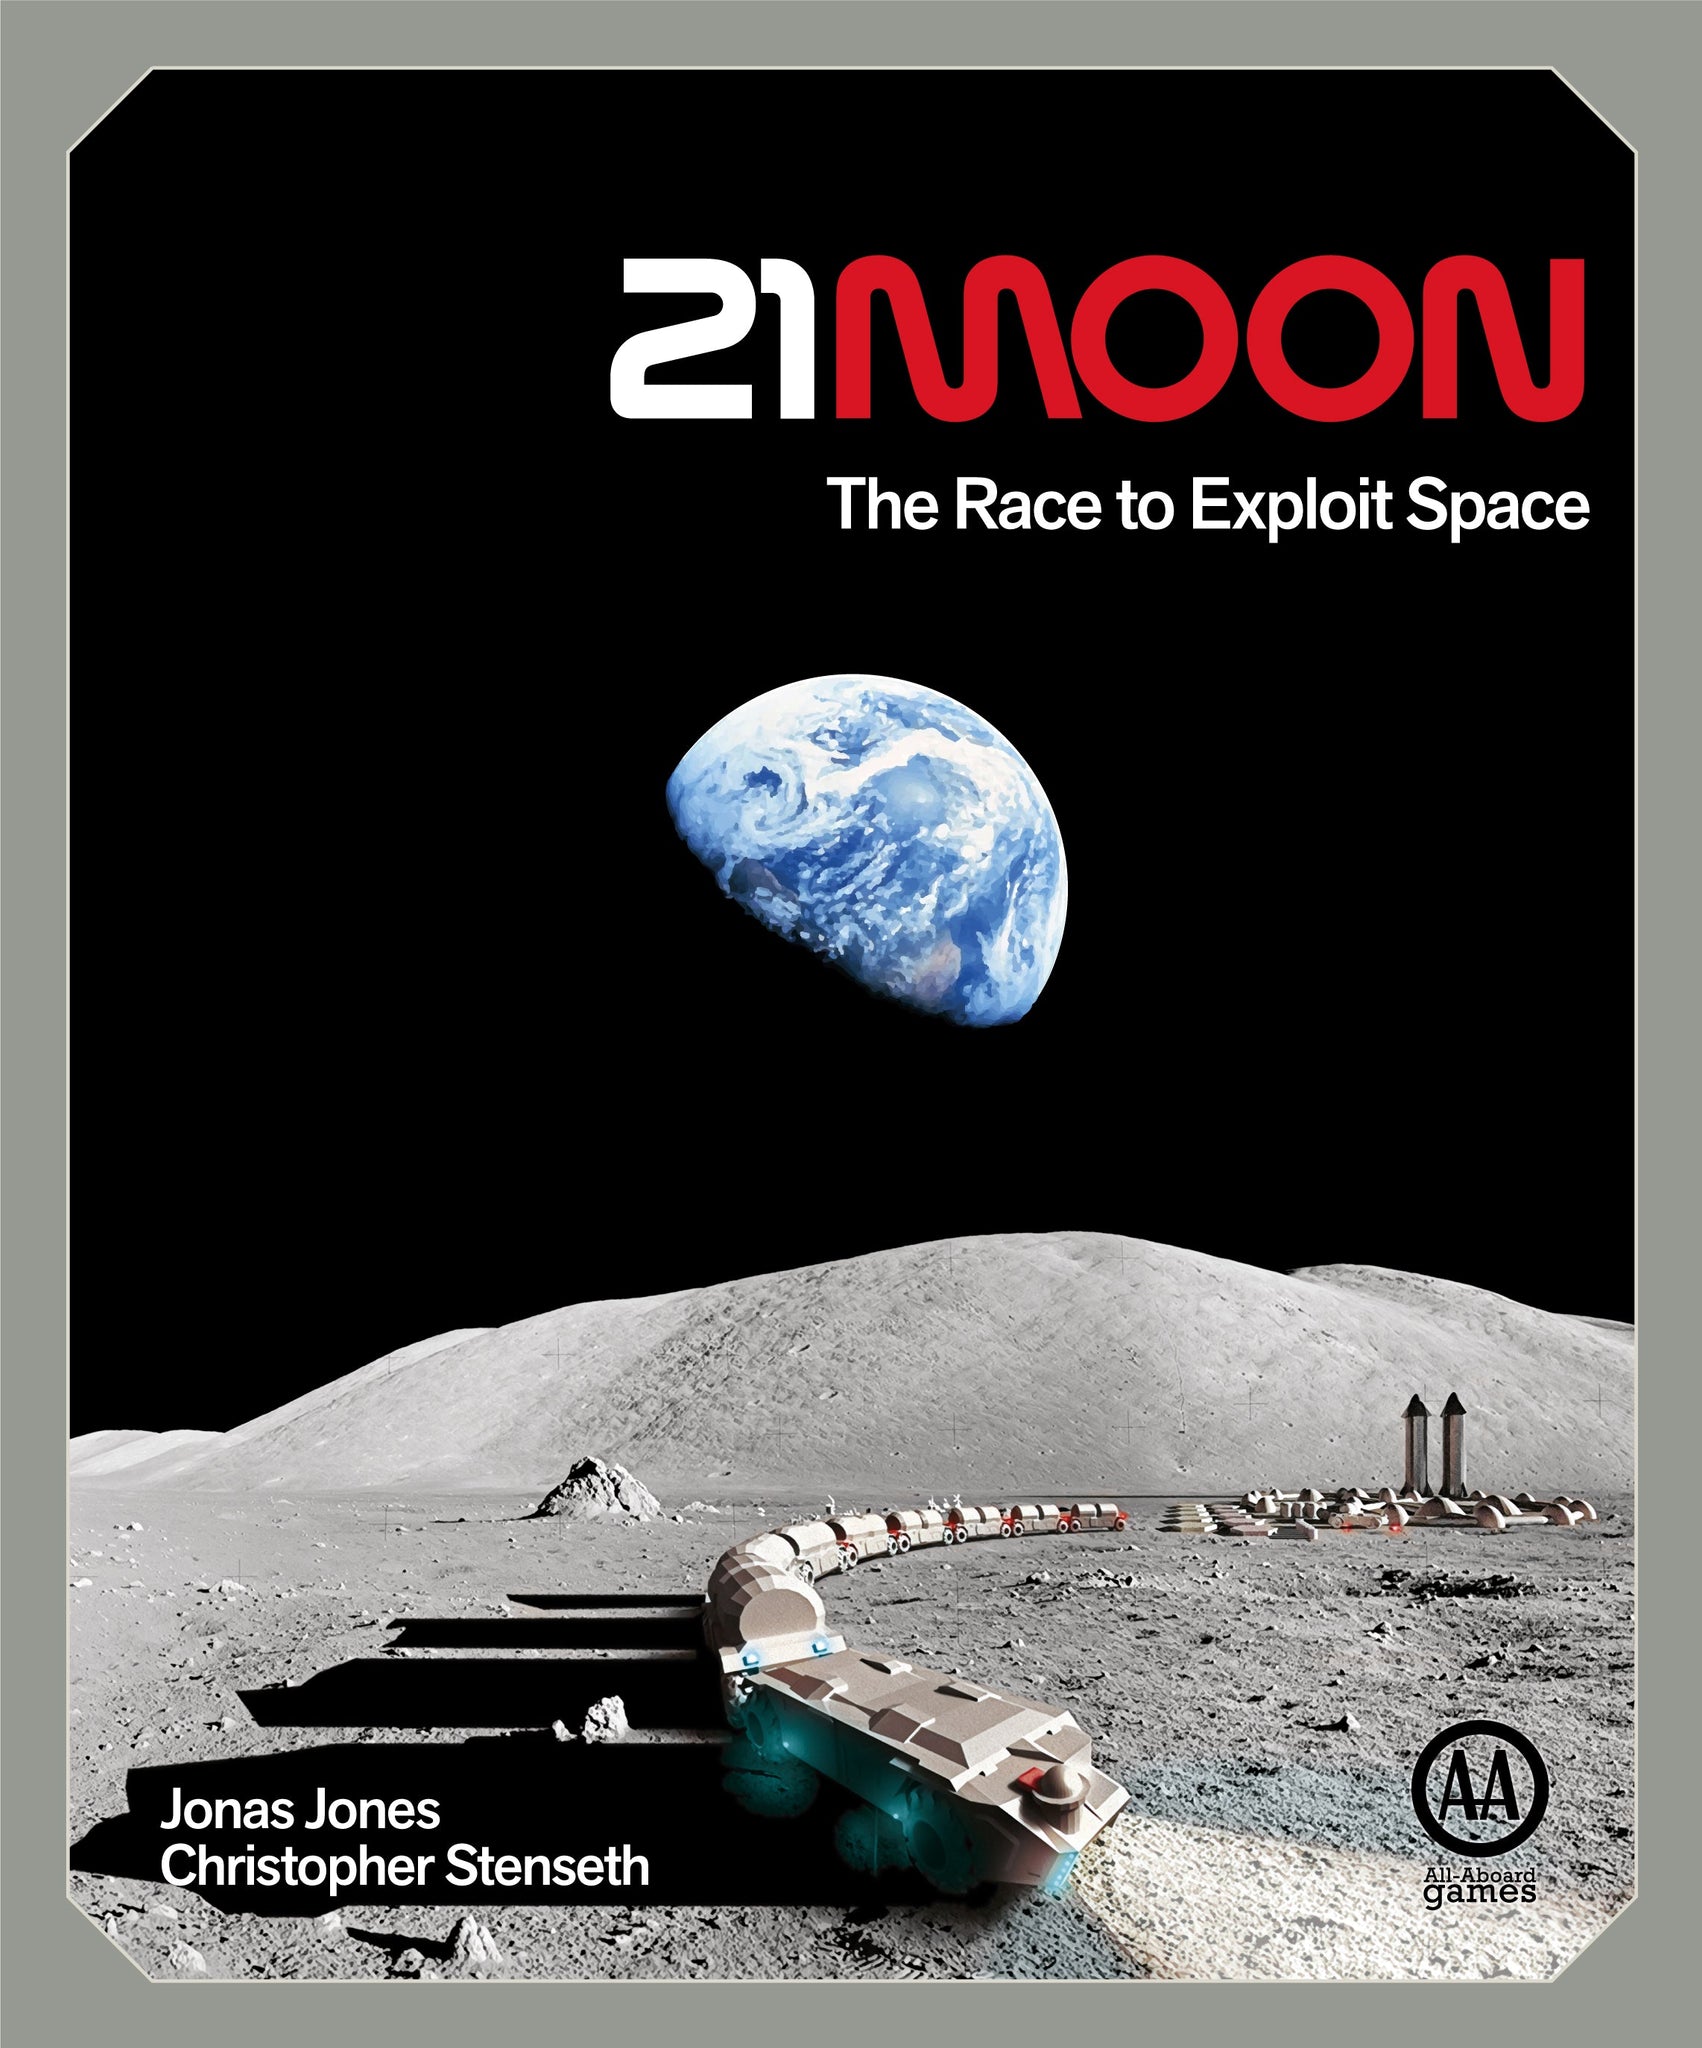 INTERNATIONAL - 21Moon: The Race to Exploit Space